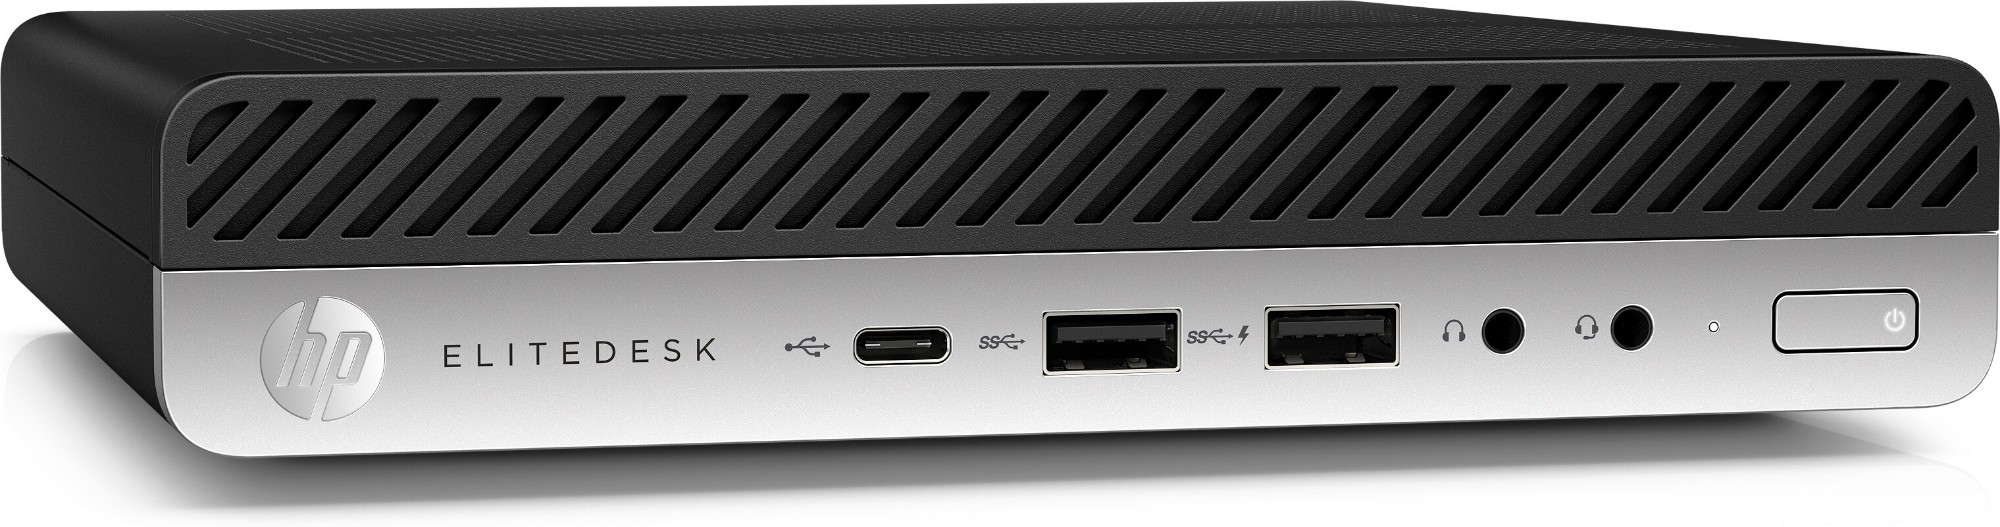 HP EliteDesk 800 G4 Home and Business Desktop Black (Intel i7-8700T 6-Core, 8GB RAM, 512GB SATA SSD, Intel UHD 630, Wifi, Bluetooth, 3xUSB 3.1, 3 Display Port (DP), Win 10 Pro) - image 2 of 4